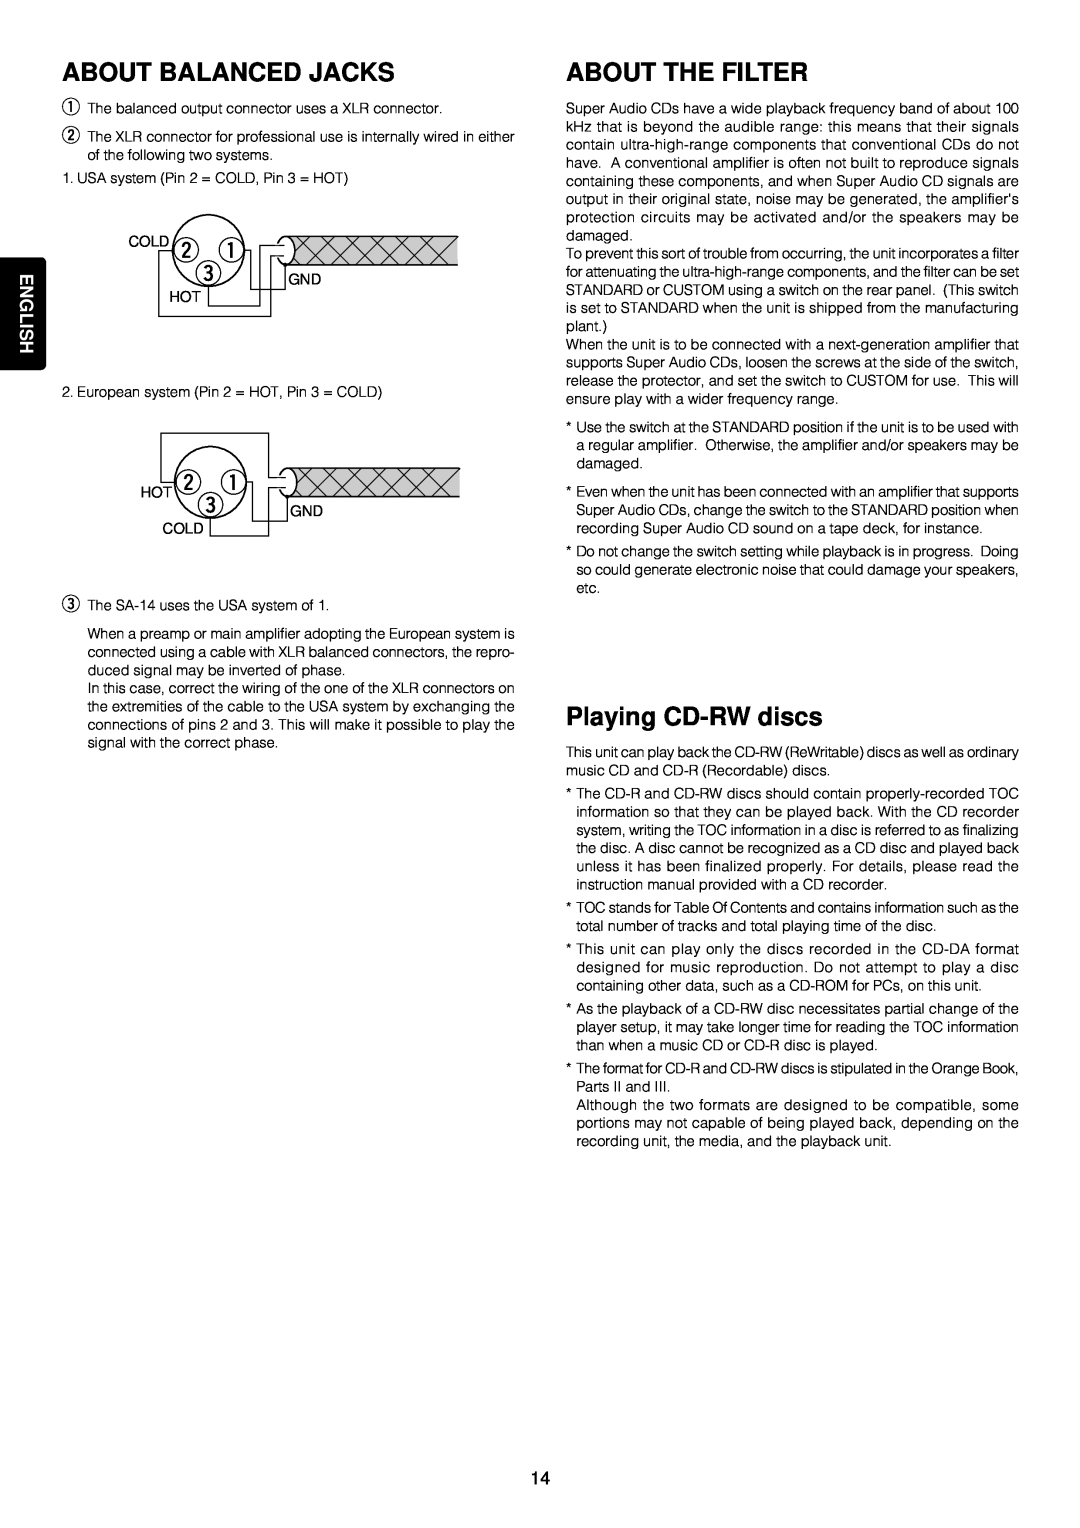 Marantz SA-14 manual About Balanced Jacks, About The Filter, Playing CD-RWdiscs 